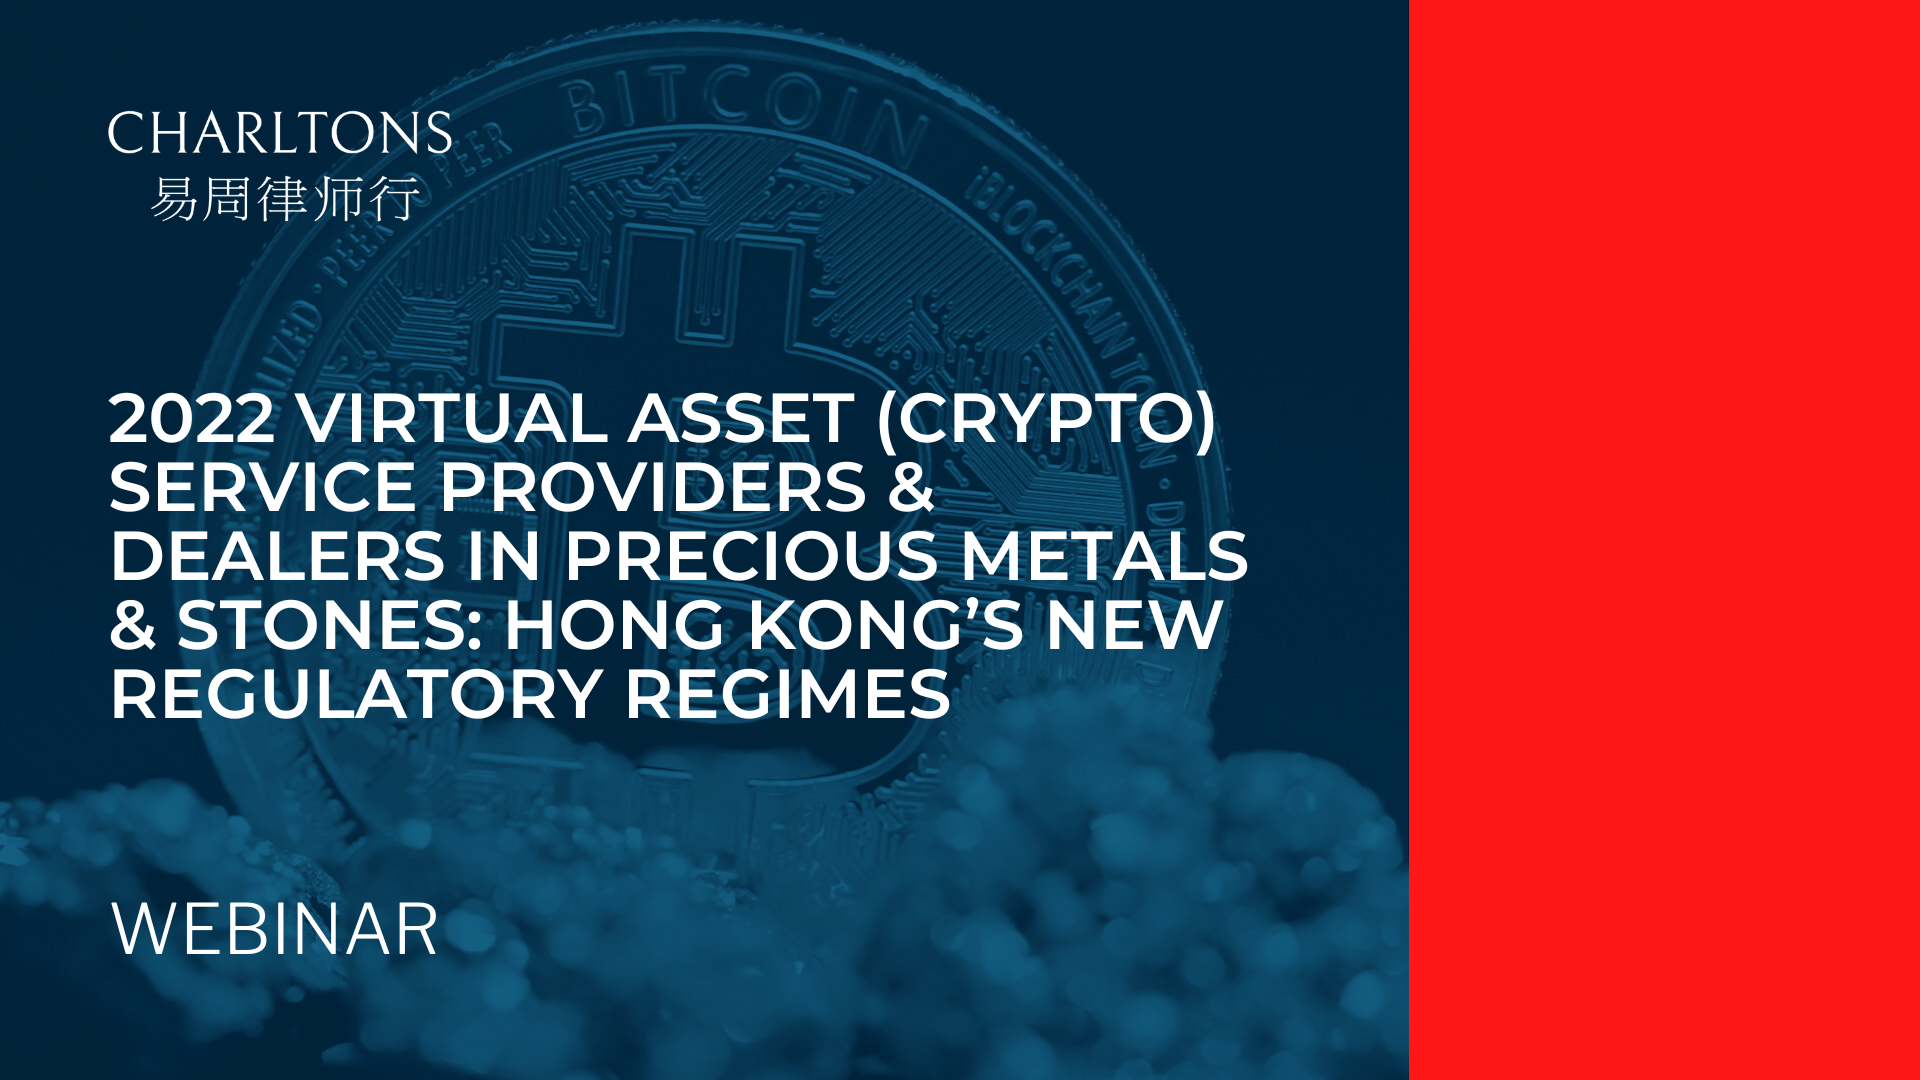 2022 Virtual Asset (Crypto) Service Providers & Dealers in Precious Metals & Stones: Hong Kong’s New Regulatory Regimes